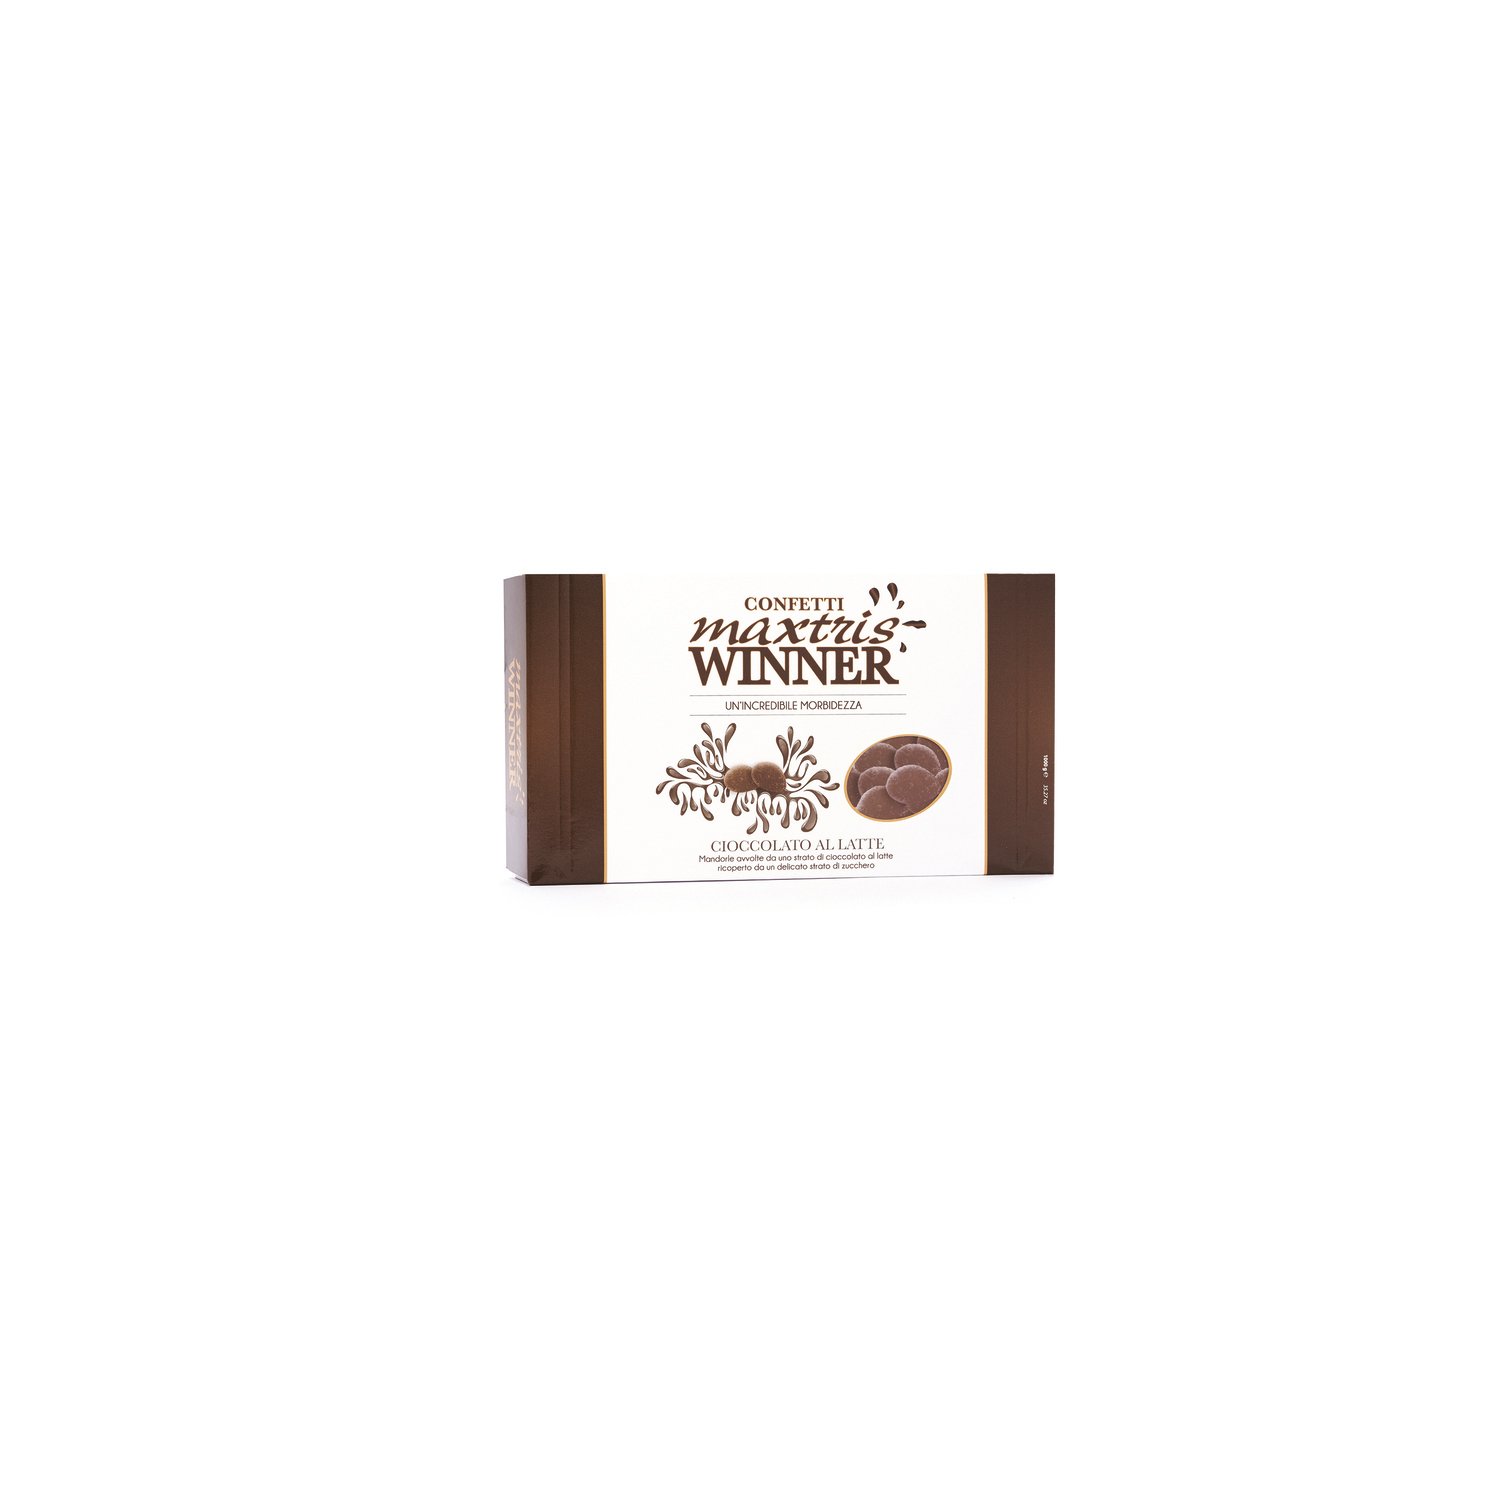 Winner Cioccolata Al Latte - toasted almonds in milk chocolate in sugar - 1kg